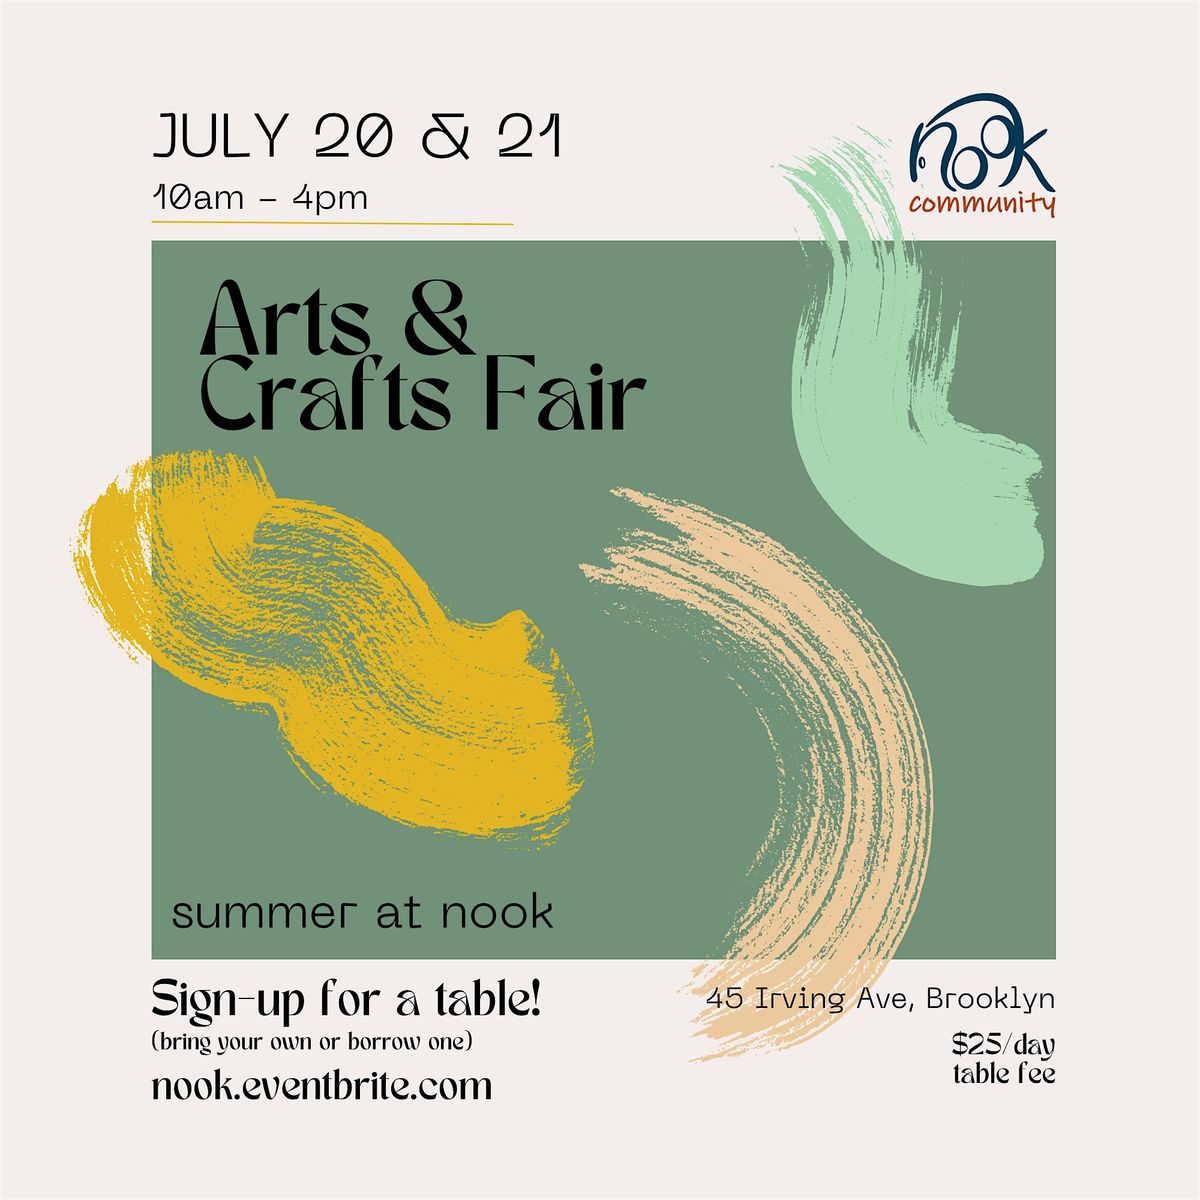 Summer Arts & Craft Fair at Nook